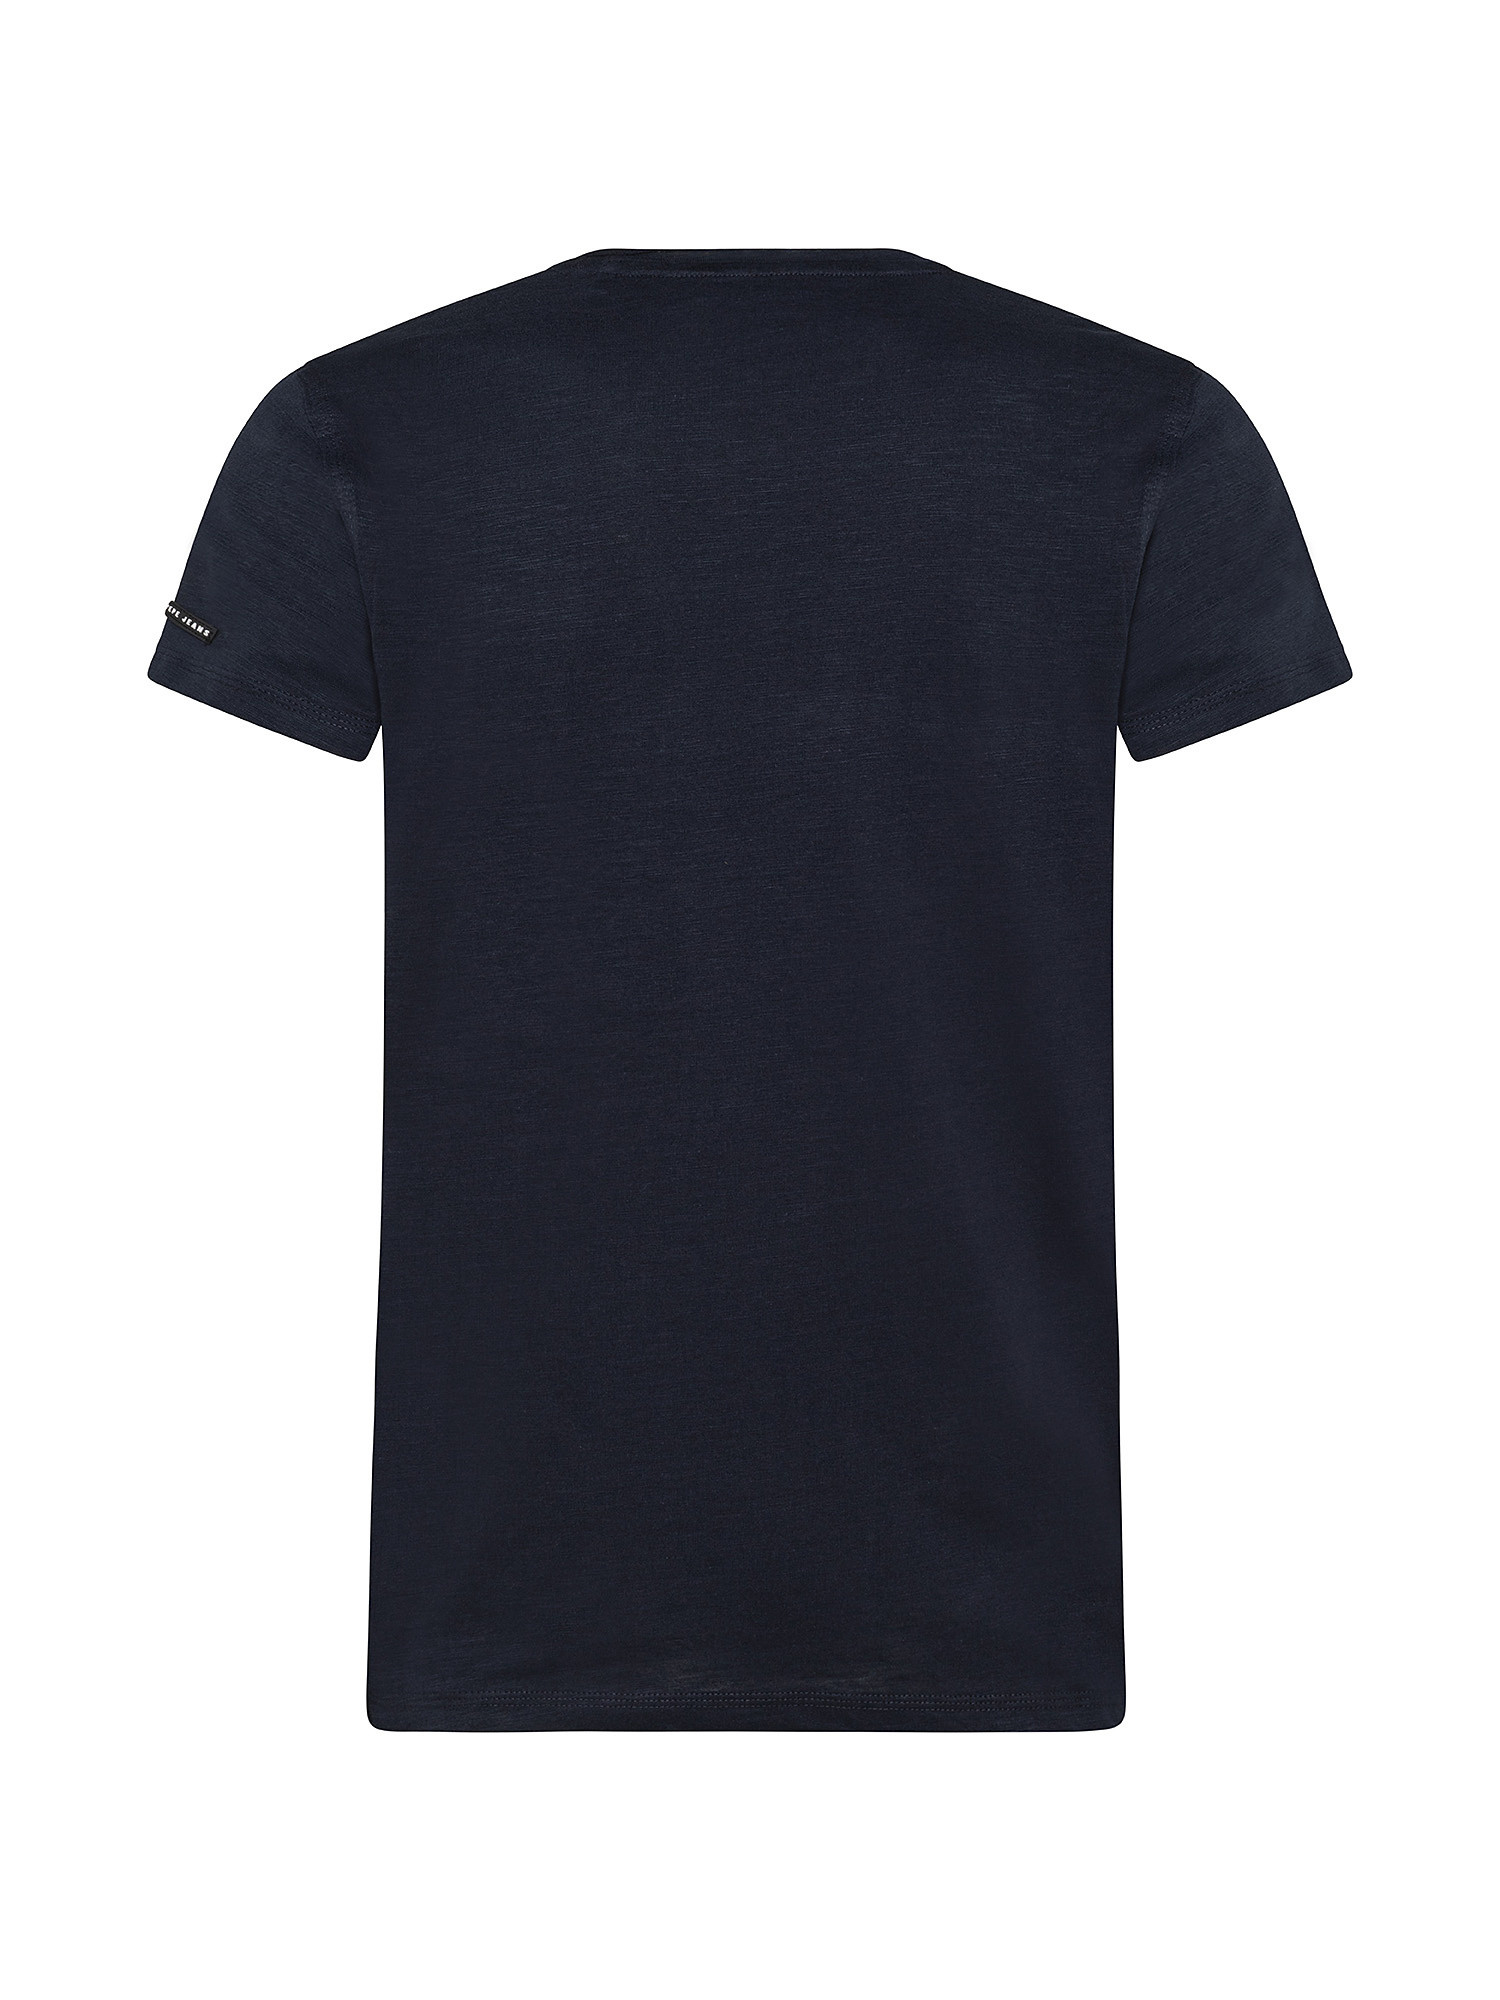 T-shirt in cotone Sherlock, Blu scuro, large image number 1